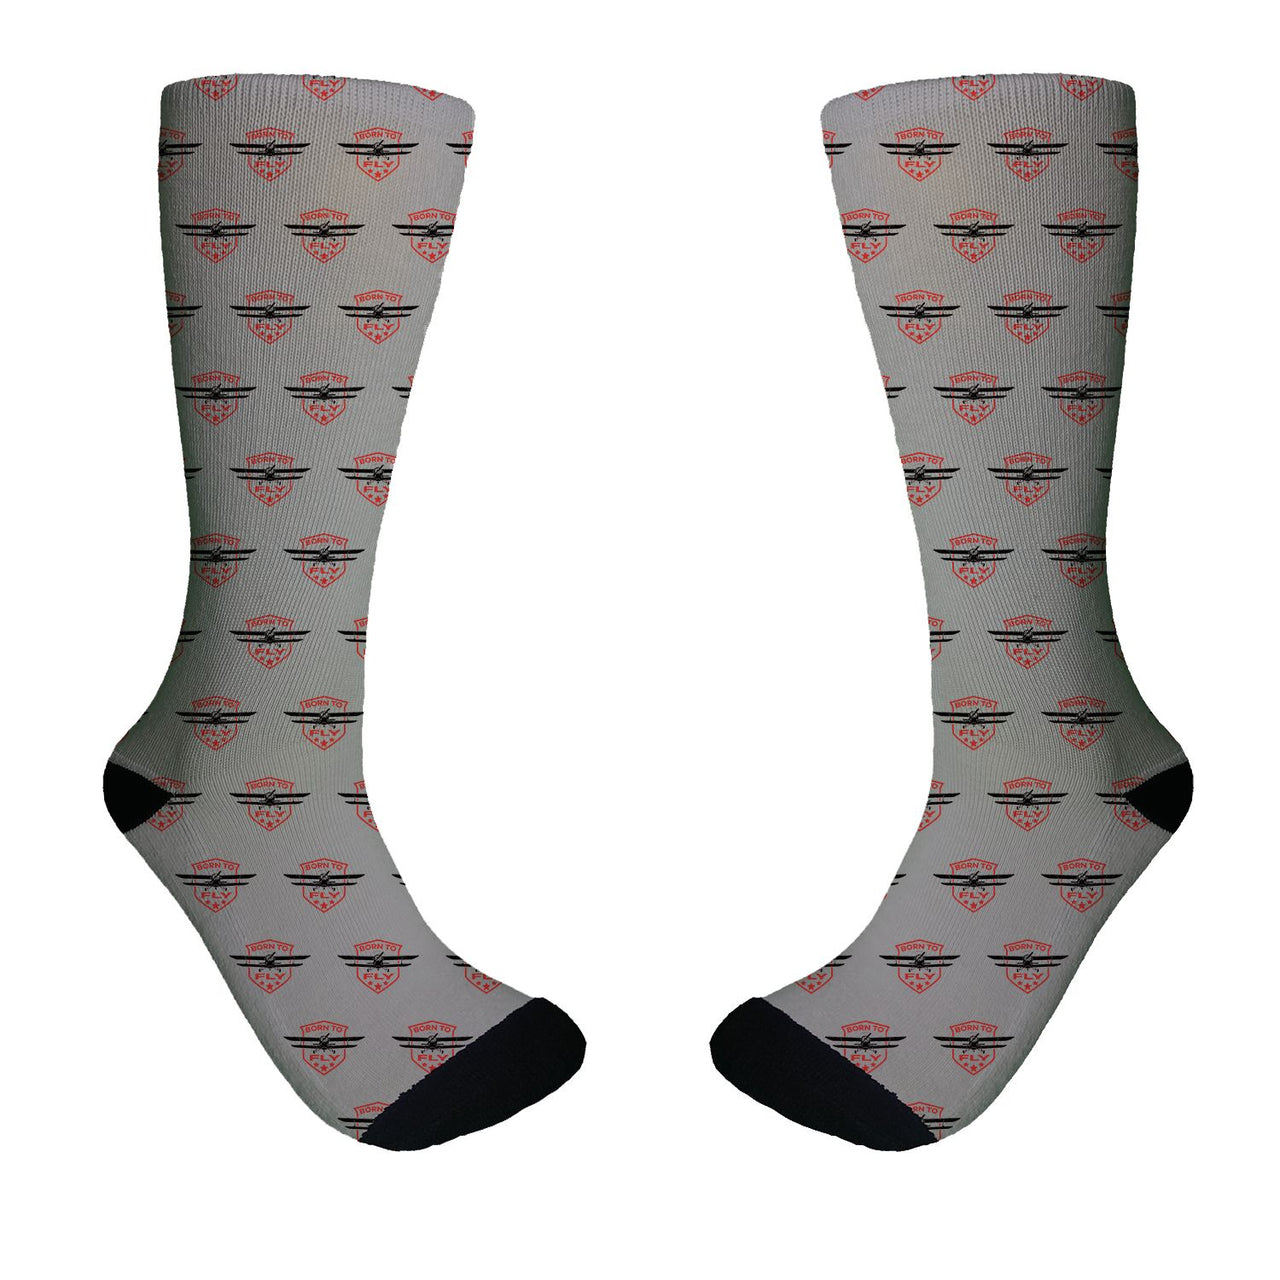 Super Born To Fly Designed Socks